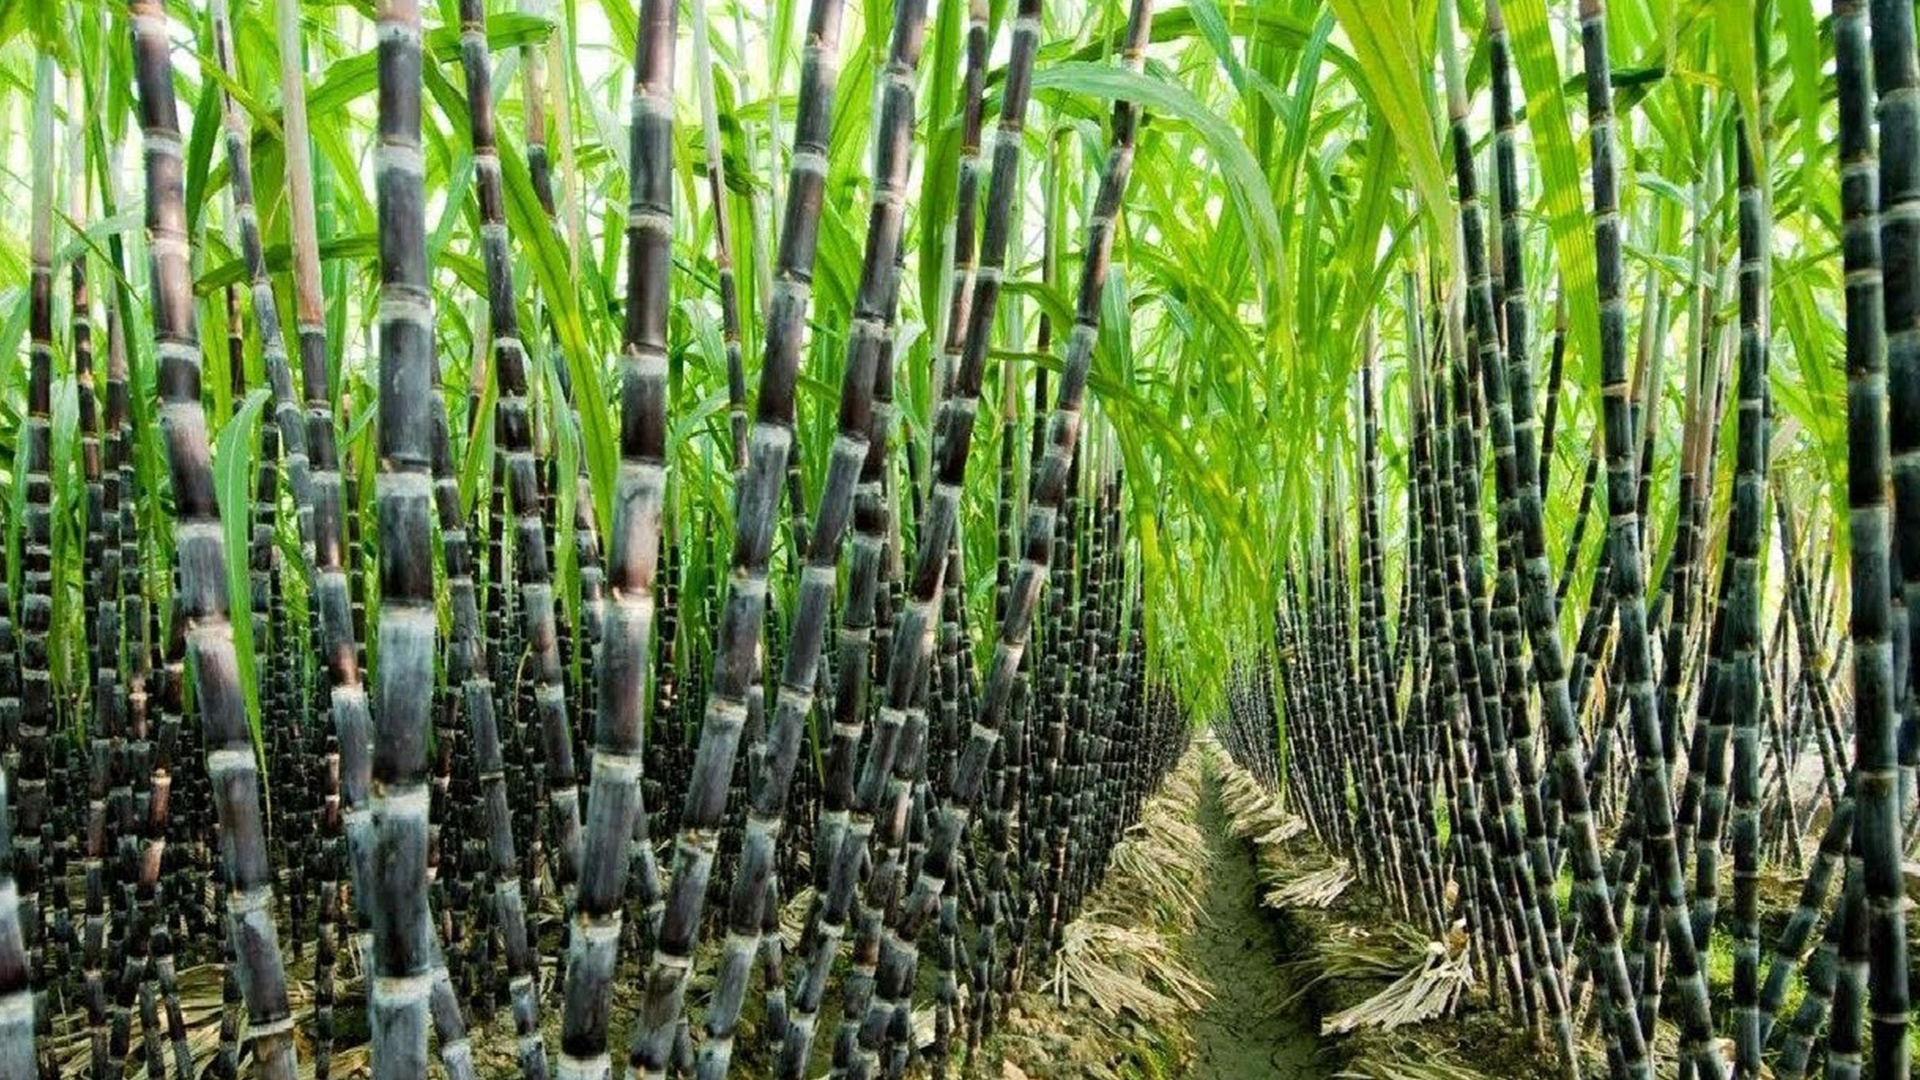 Sugarcane farmers on agitation again